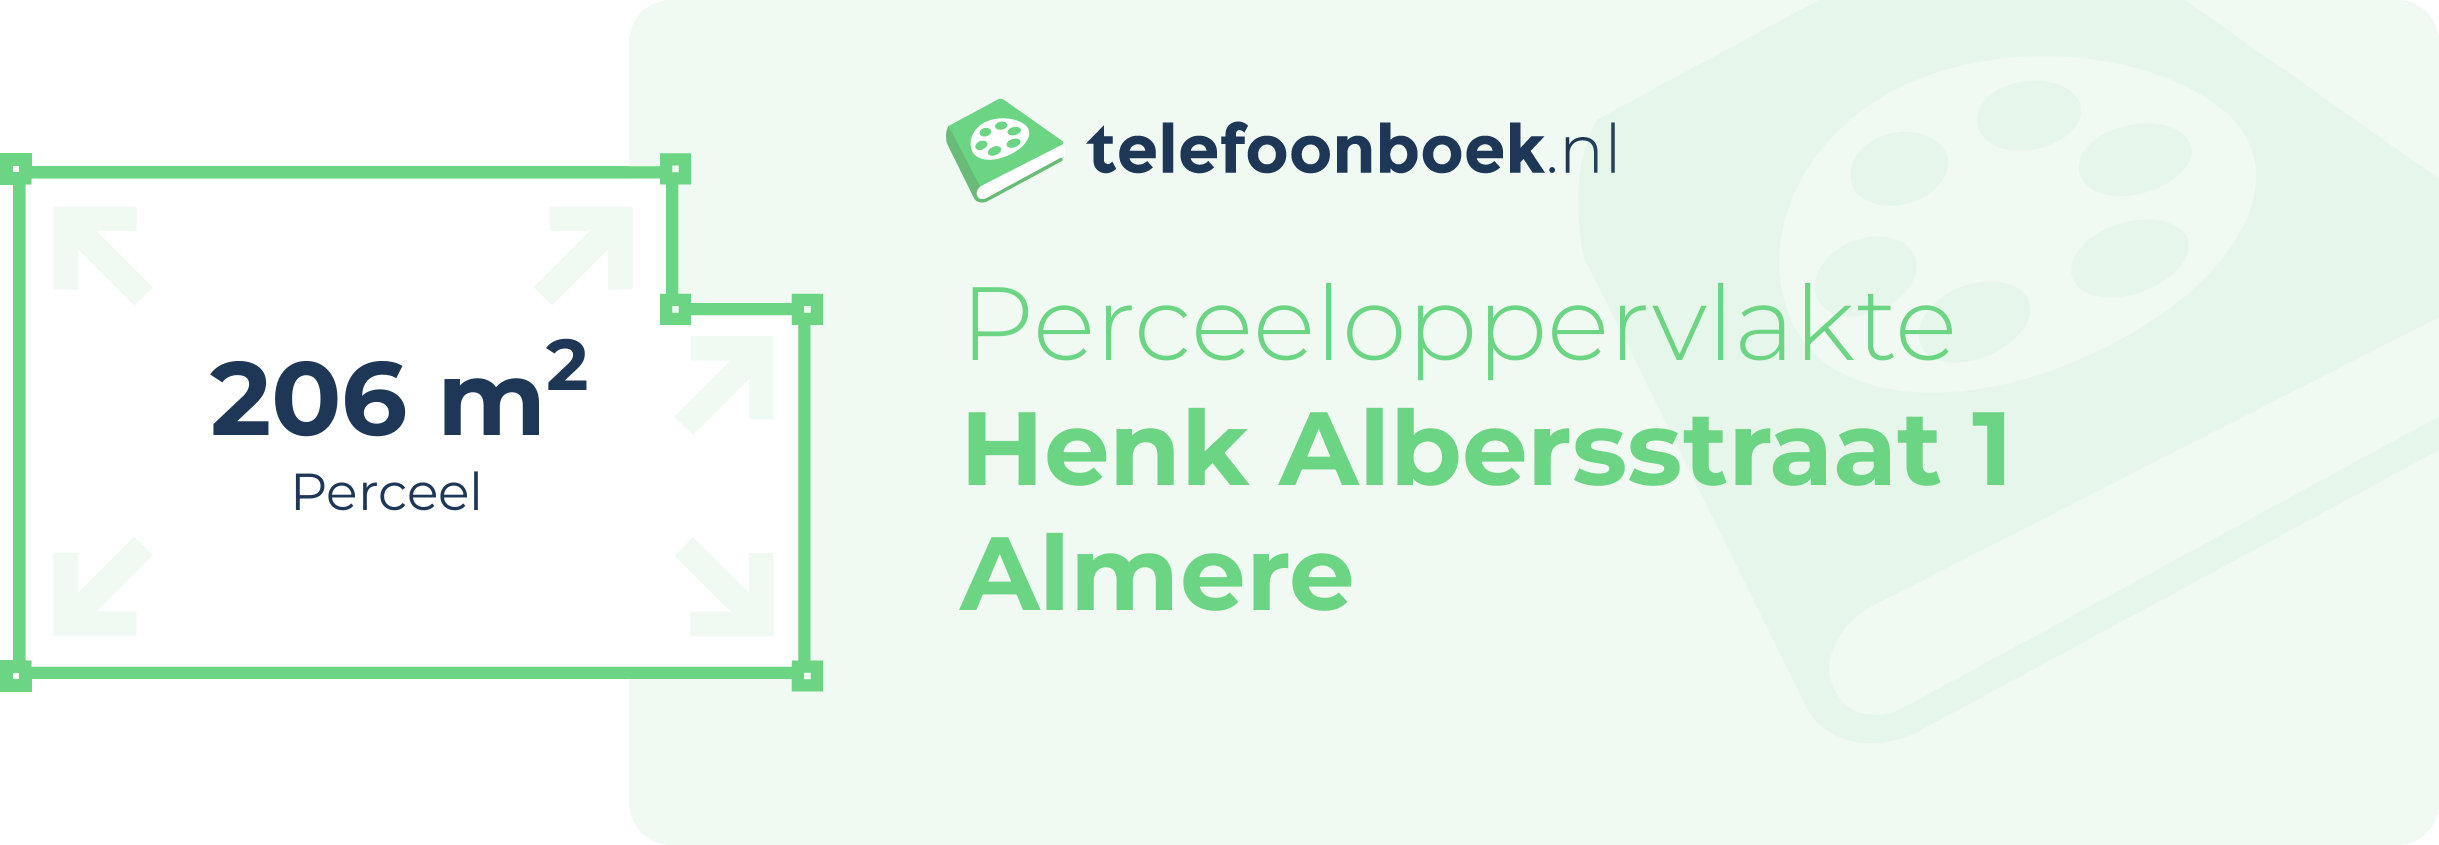 Perceeloppervlakte Henk Albersstraat 1 Almere